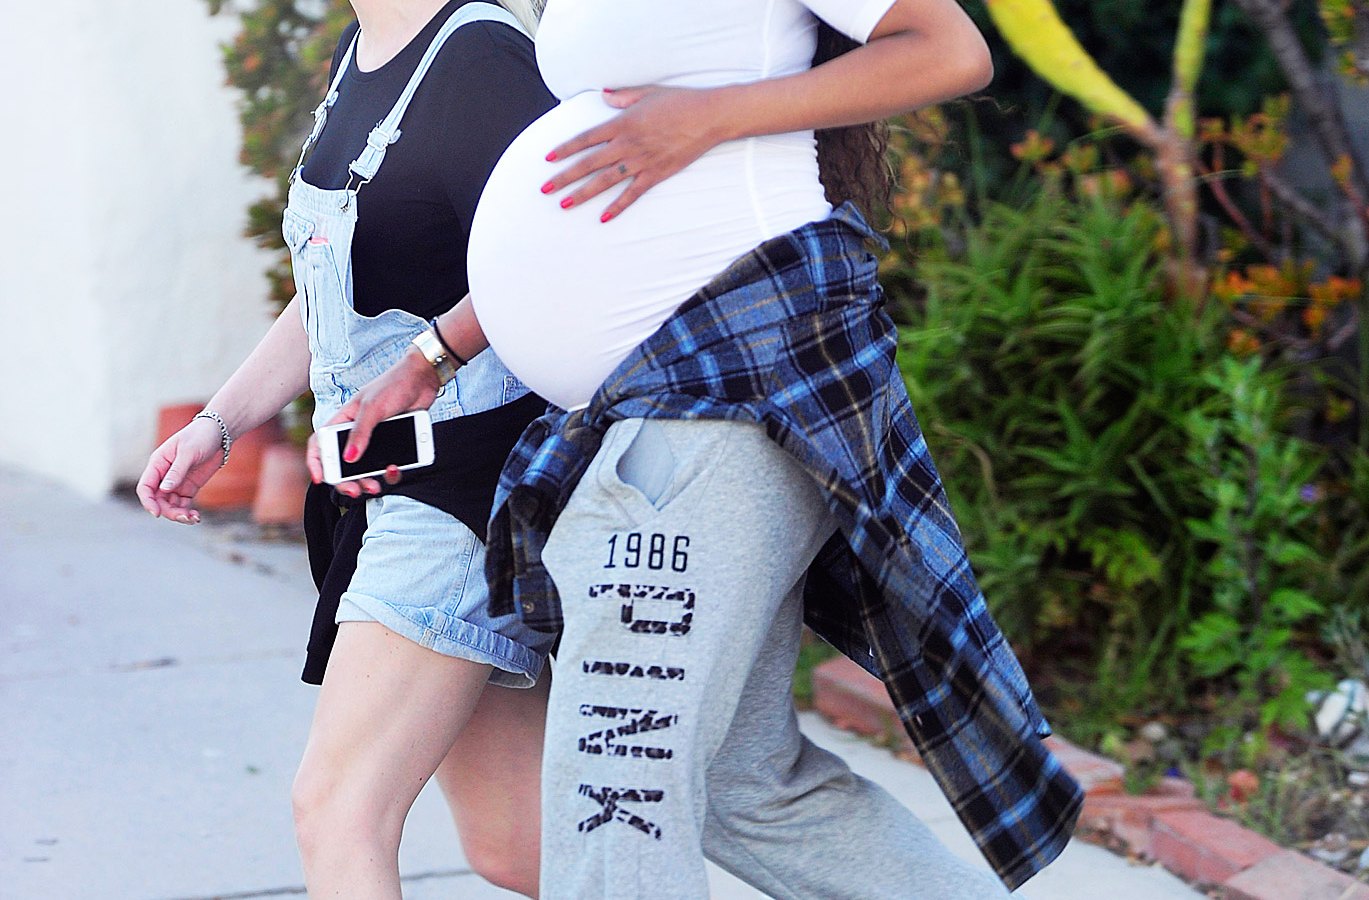 Ciara and her massive baby bump on May 12, 2014